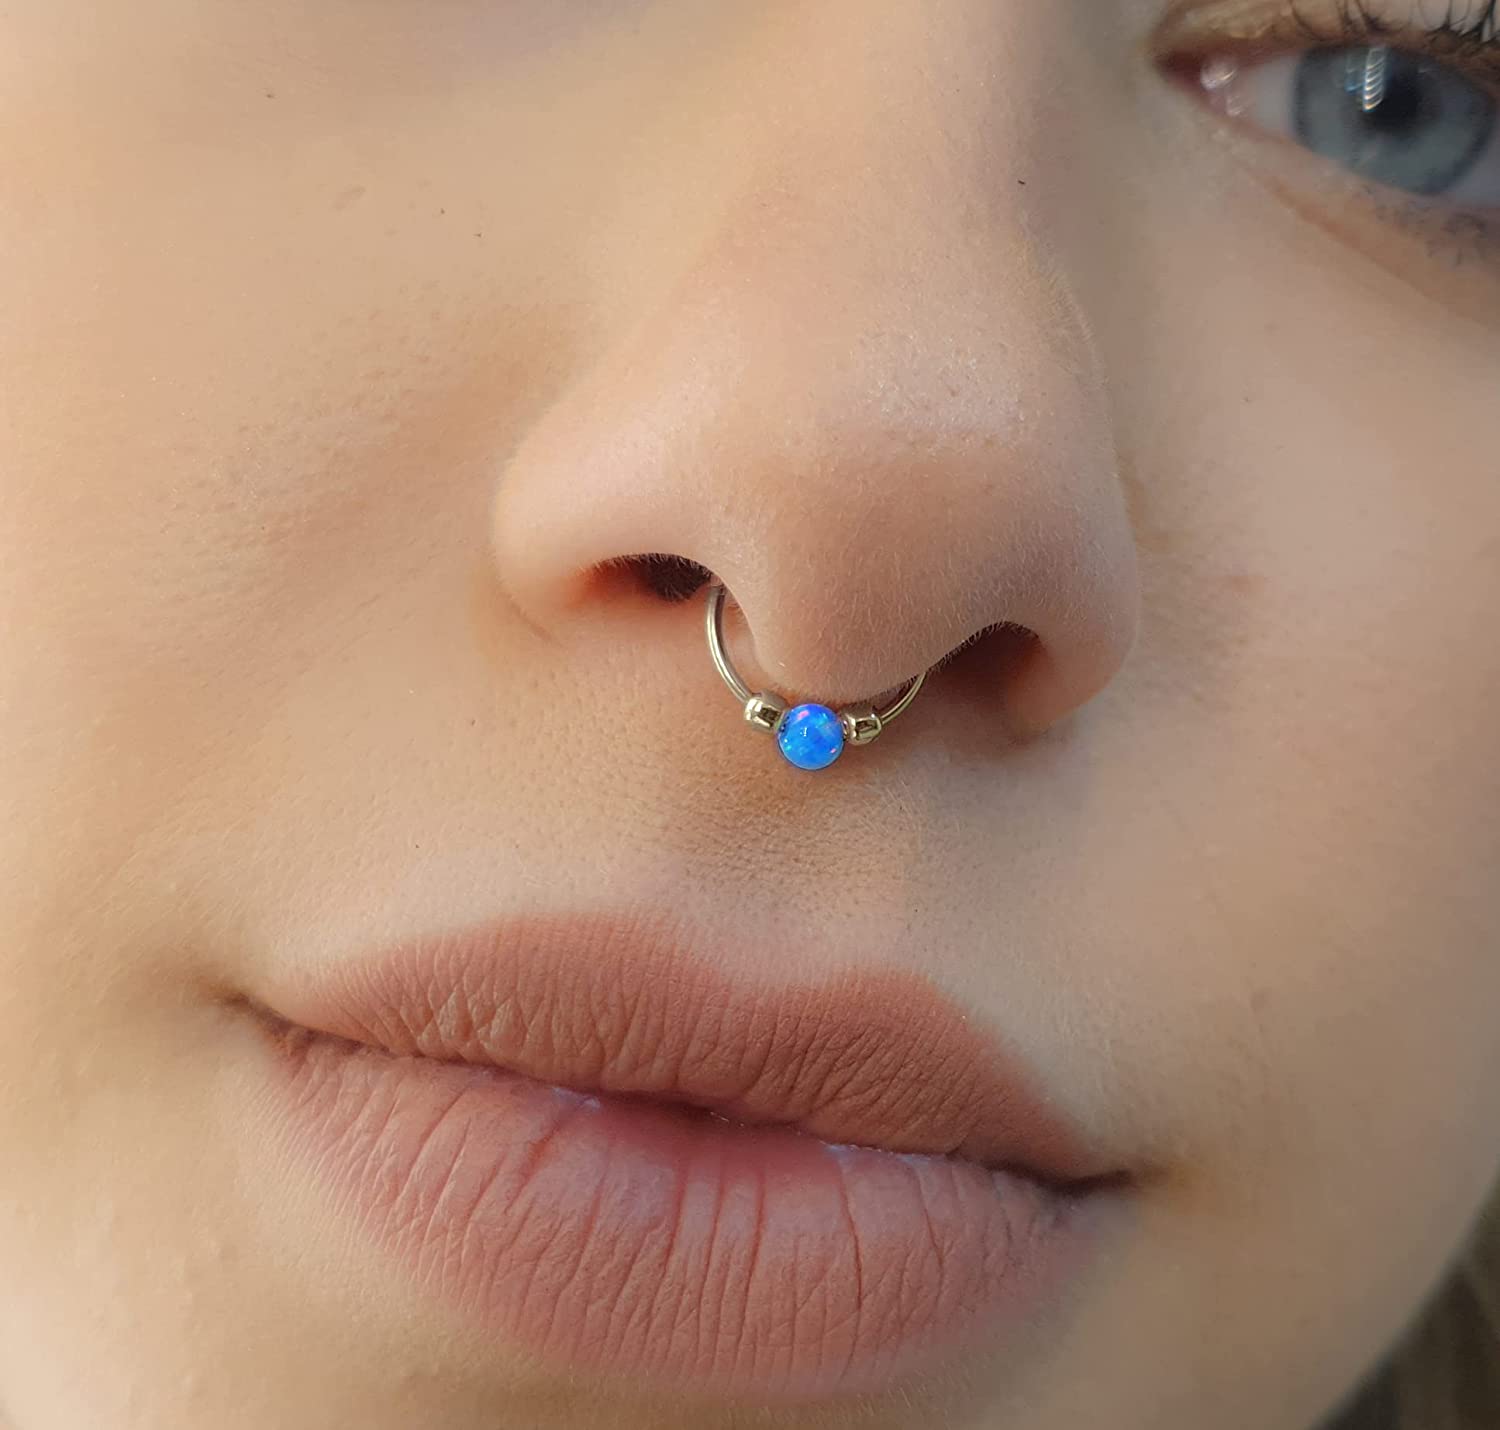 Details about   20G Nose Ring Light Blue Opal piercing Hoop 